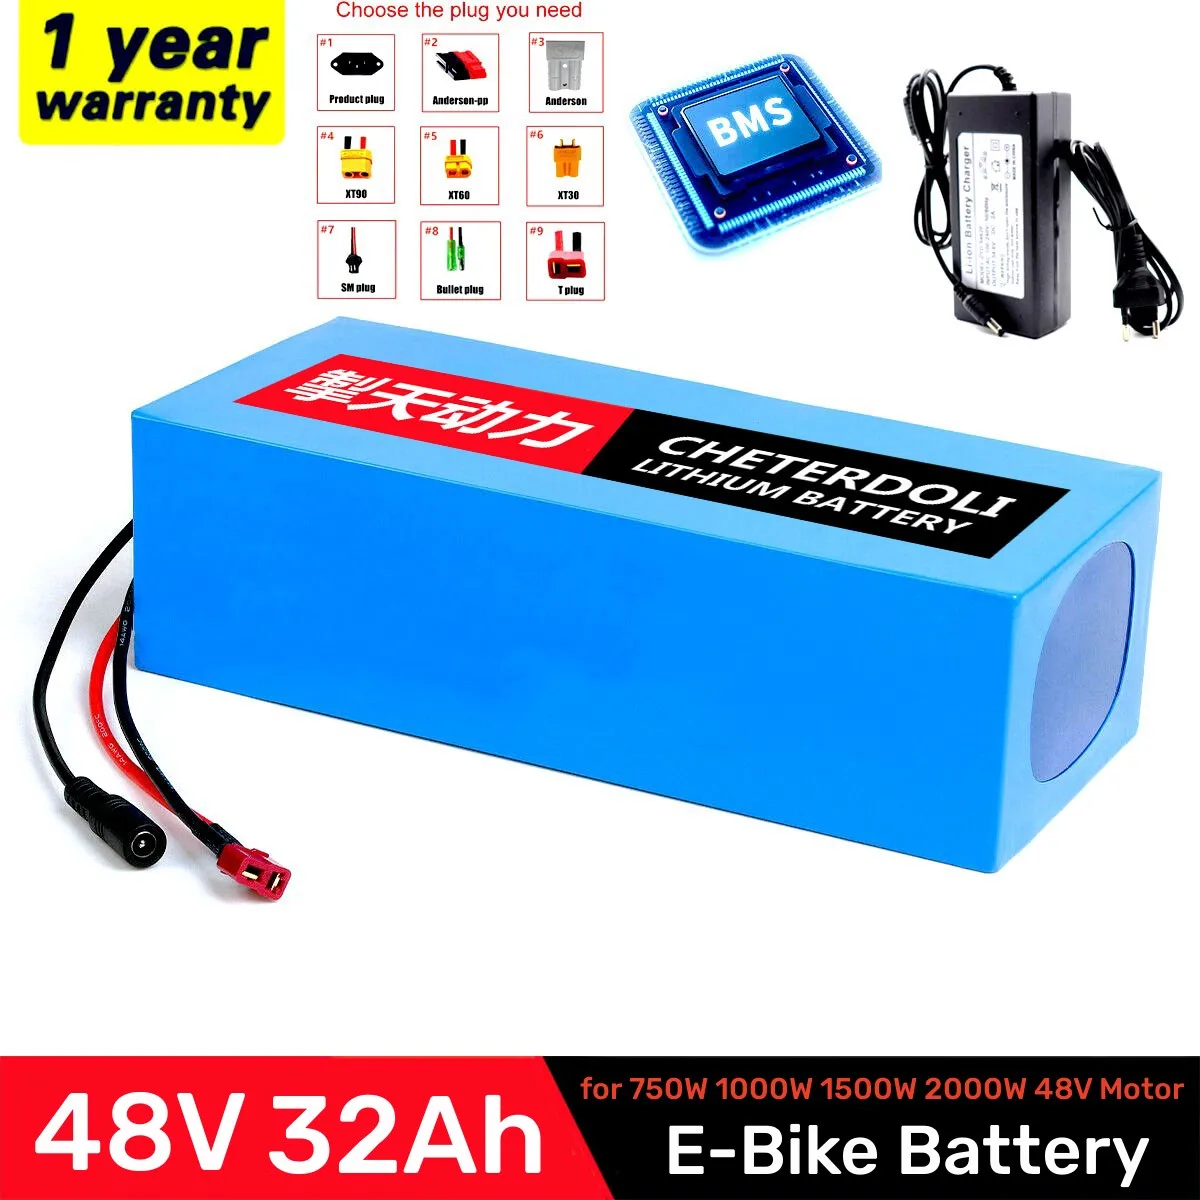 

Aleaivy 48V 32ah 1500W Electric Bike Battery 48V 20ah 24ah 18ah 15ah 18650 Lithium Batteries for 54.6v750W 1000W Ebike Motor